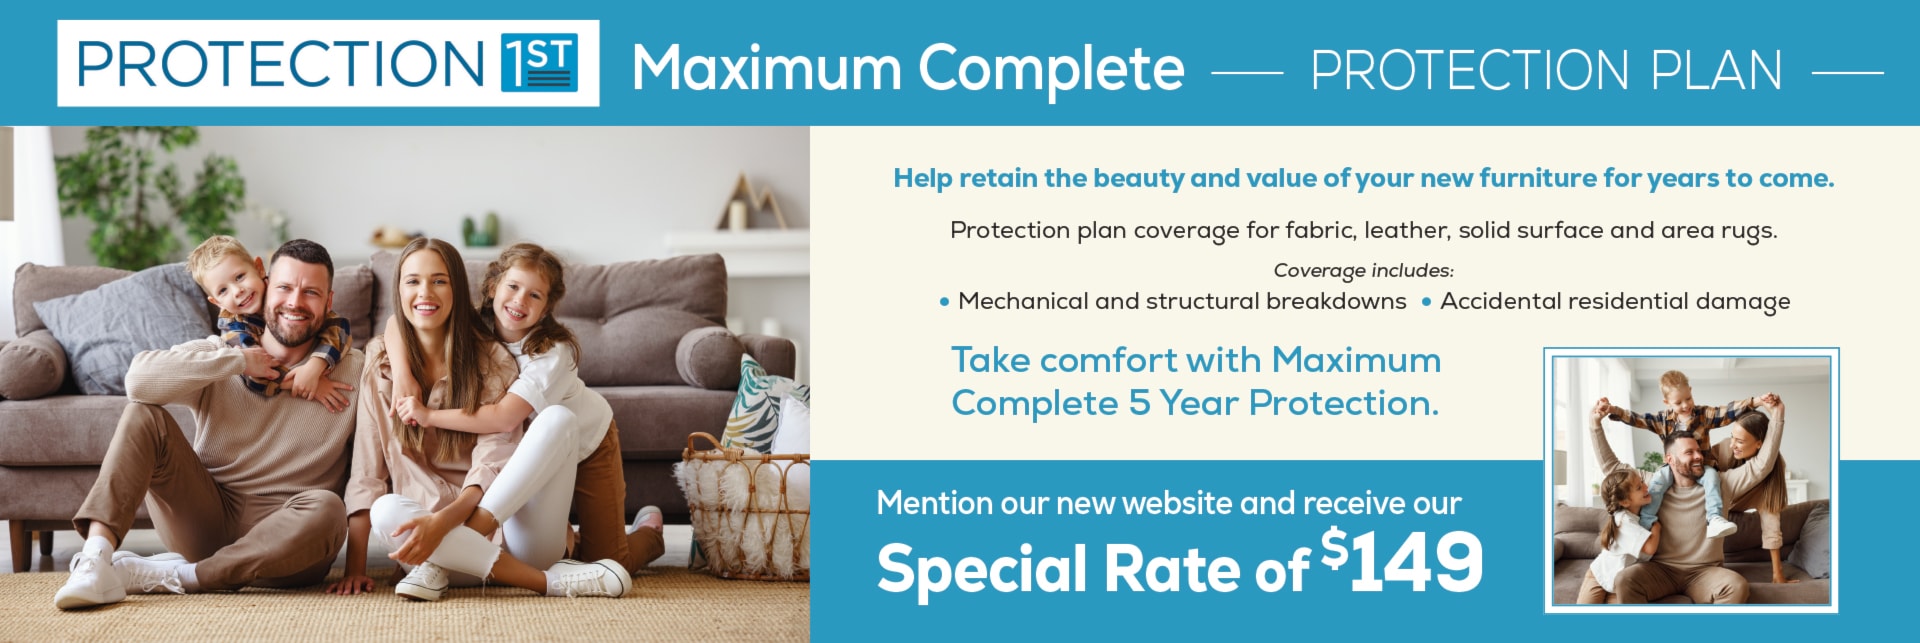 Furniture Protection Plan - Maximum Complete